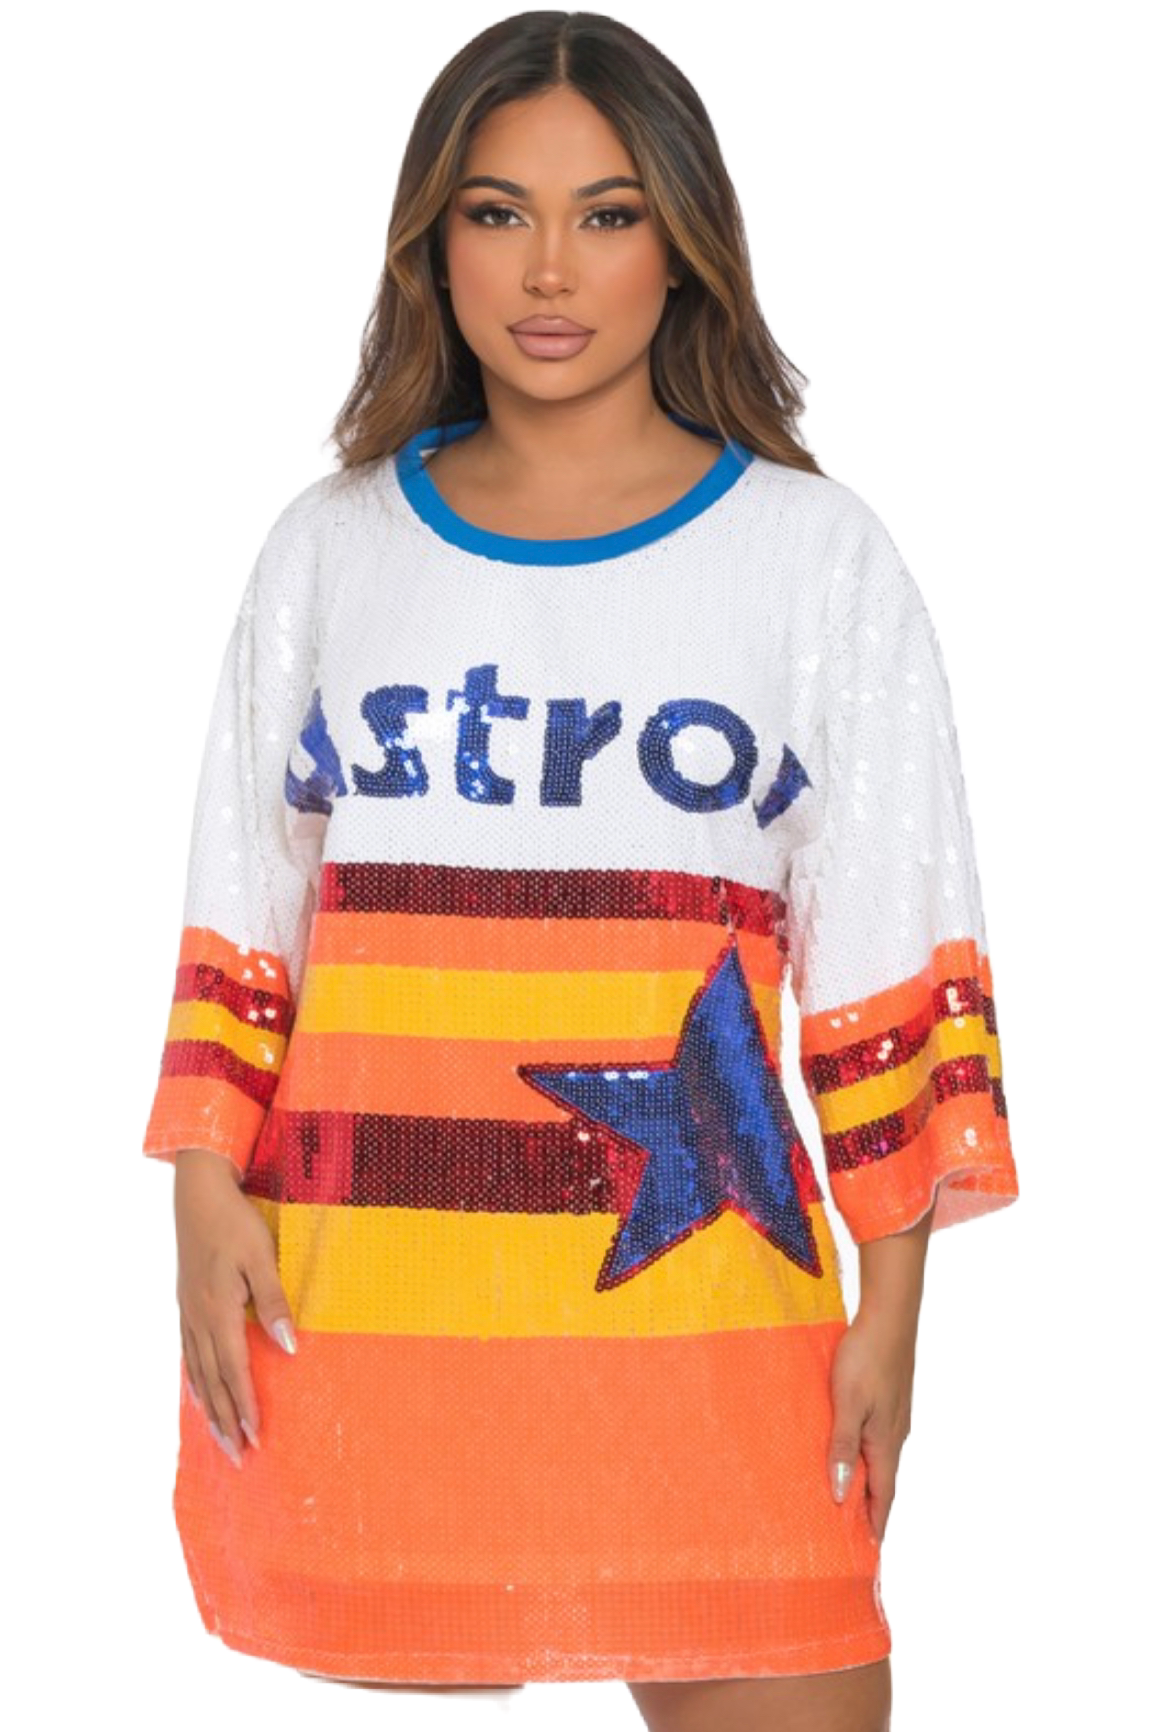 Astros tshirt dress, Houston Astros glitter dress, MLB apparel